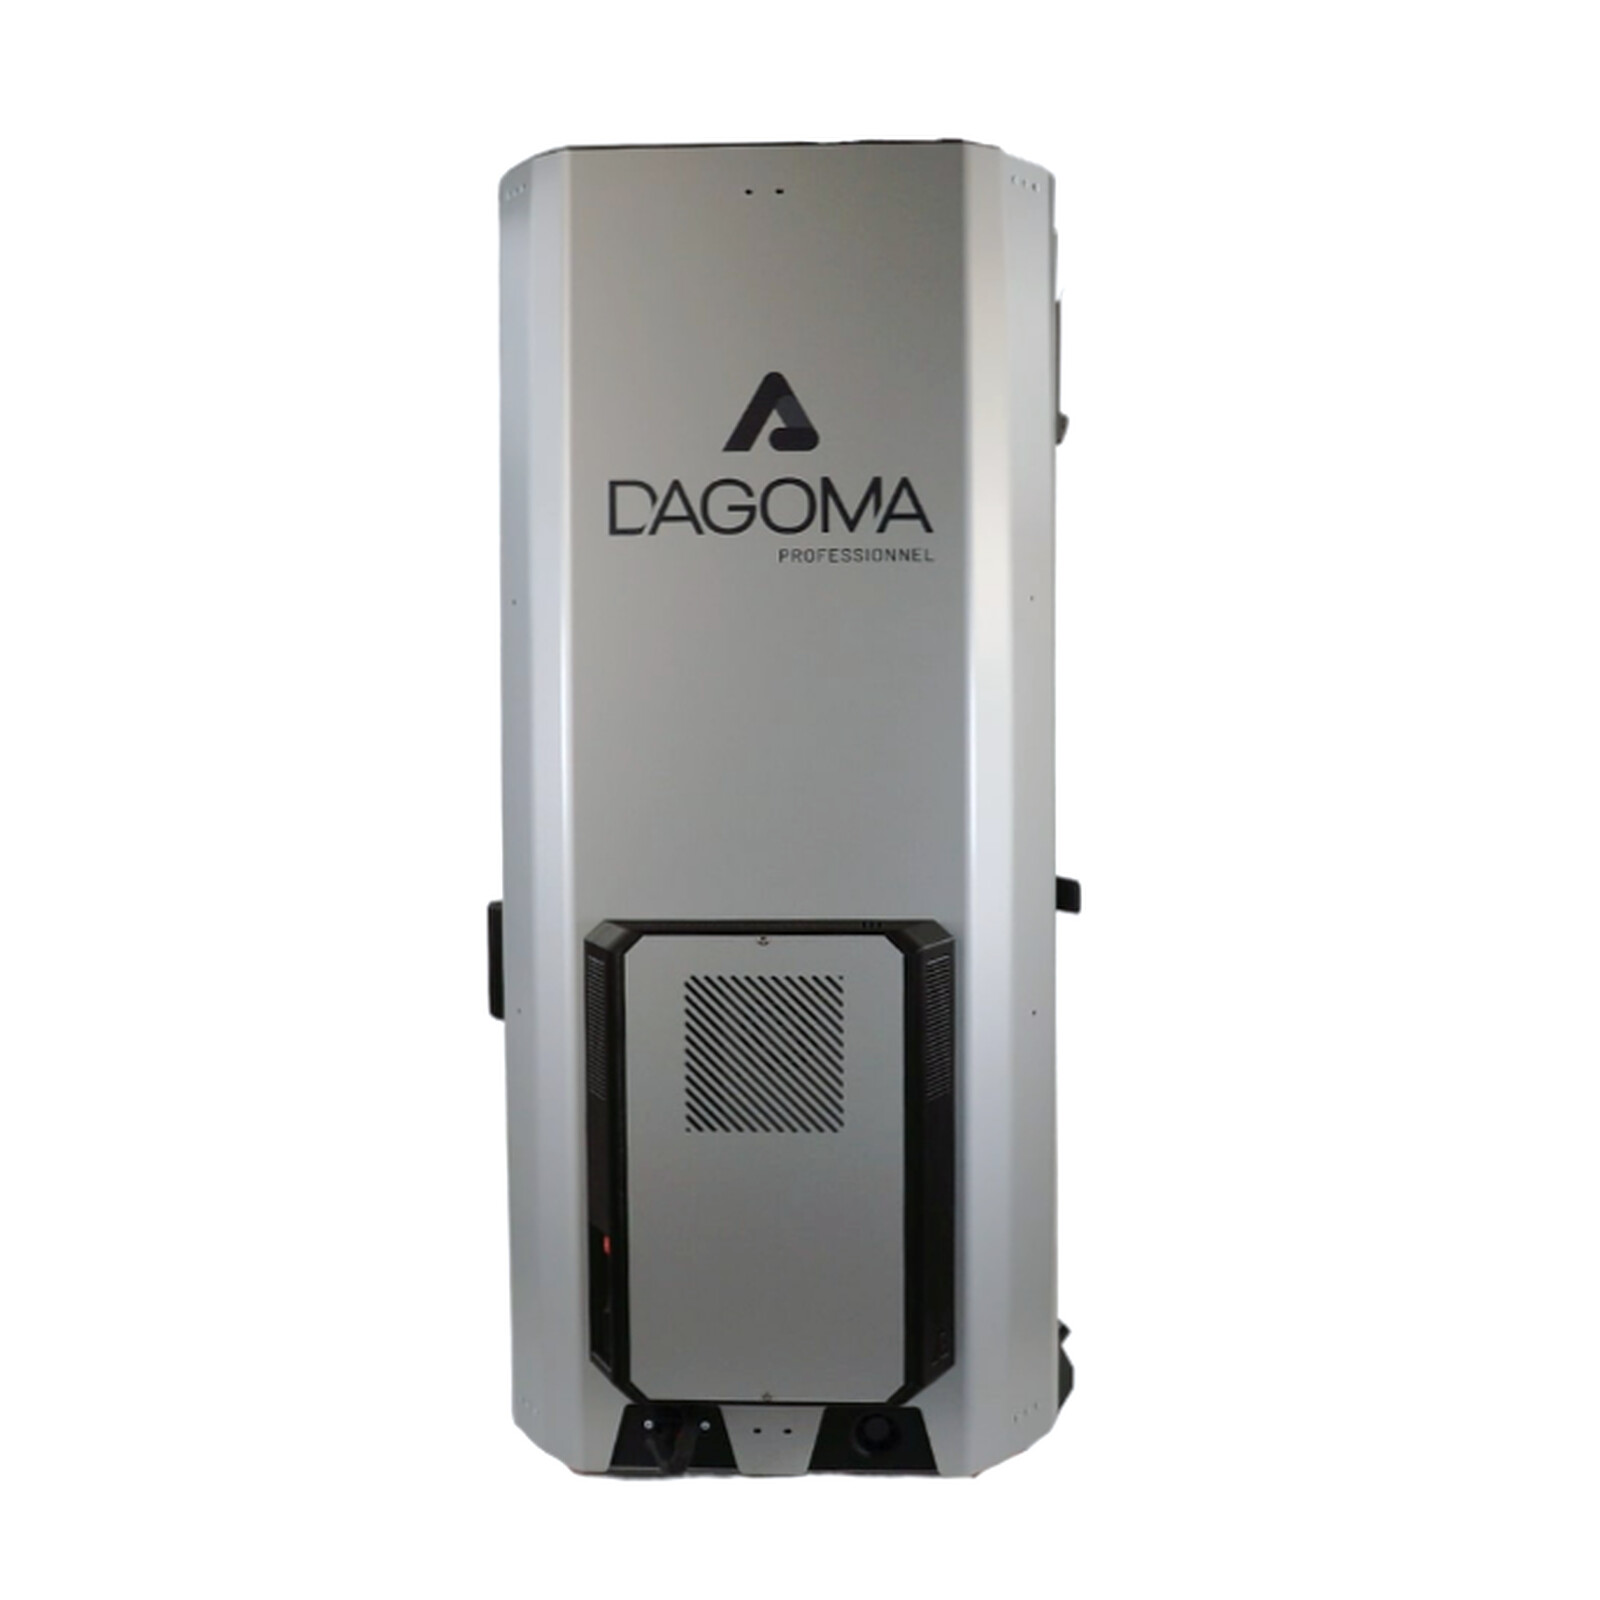 Dagoma Caisson de protection - Imprimante 3D - Garantie 3 ans LDLC